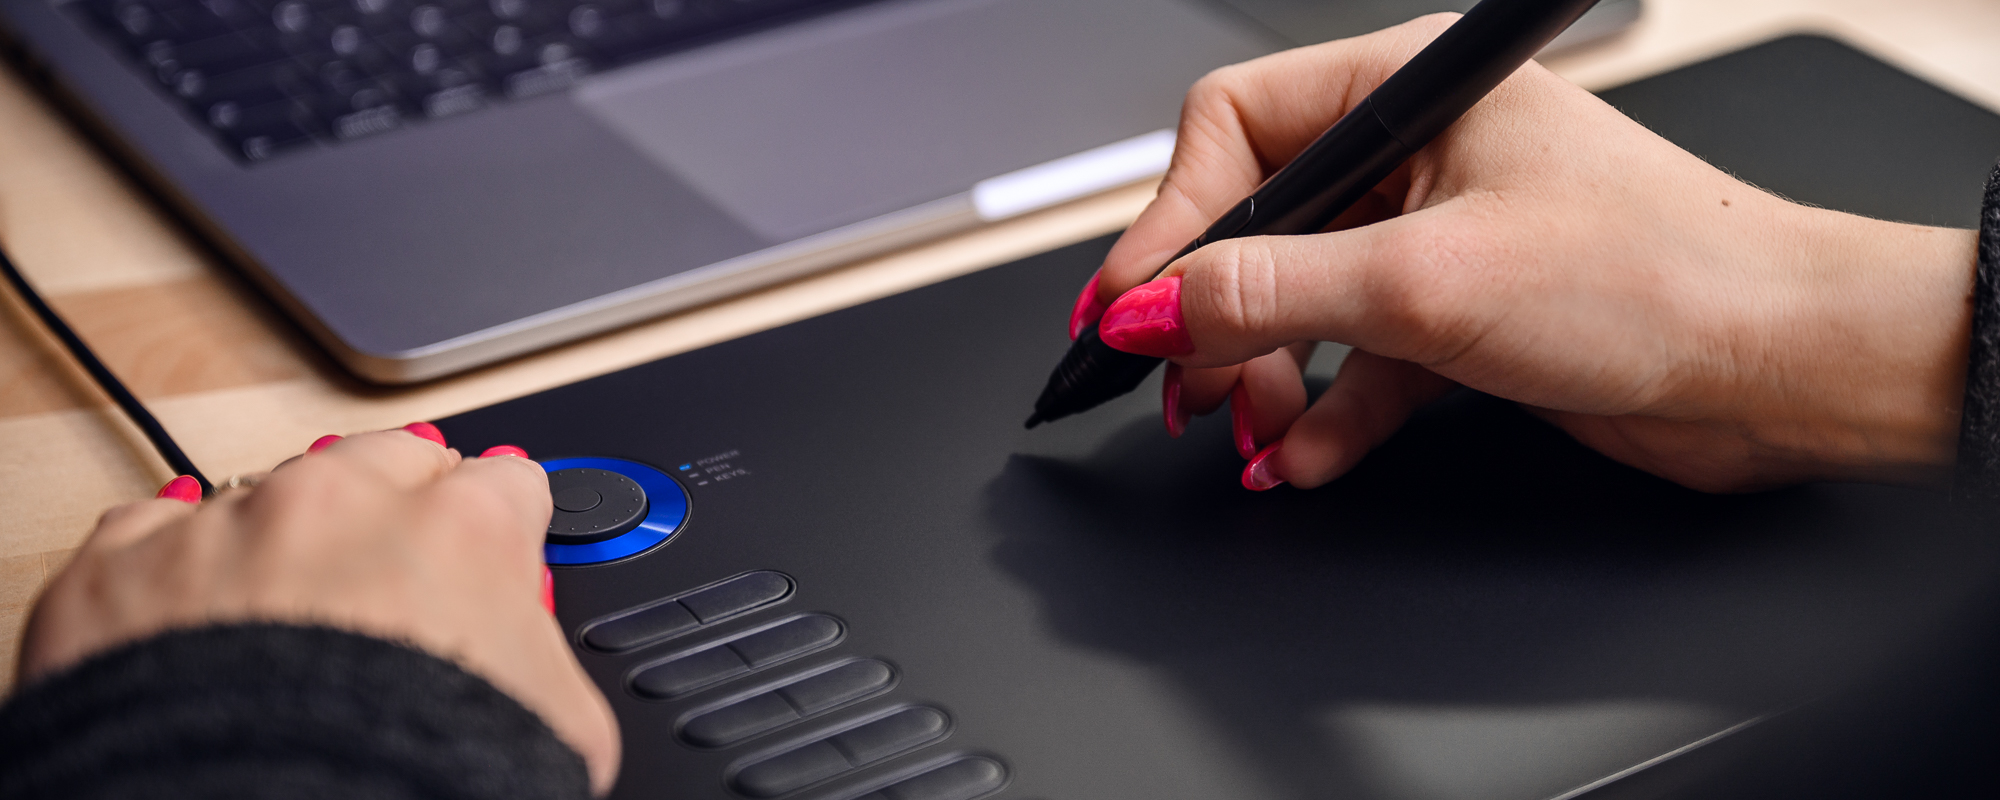 Photo - Veikk A15 Pro graphics tablet on light brown desk, woman's left hand pressing function key, right hand operates Veikk passive pen